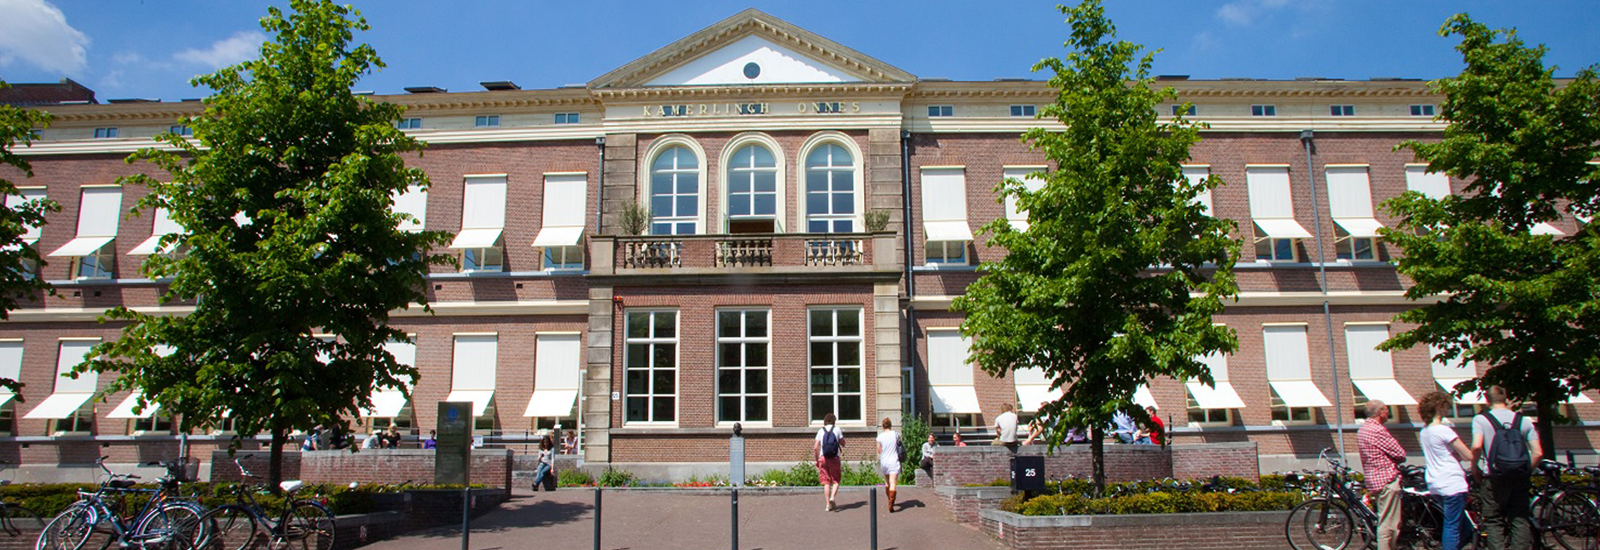 KOG building Leiden